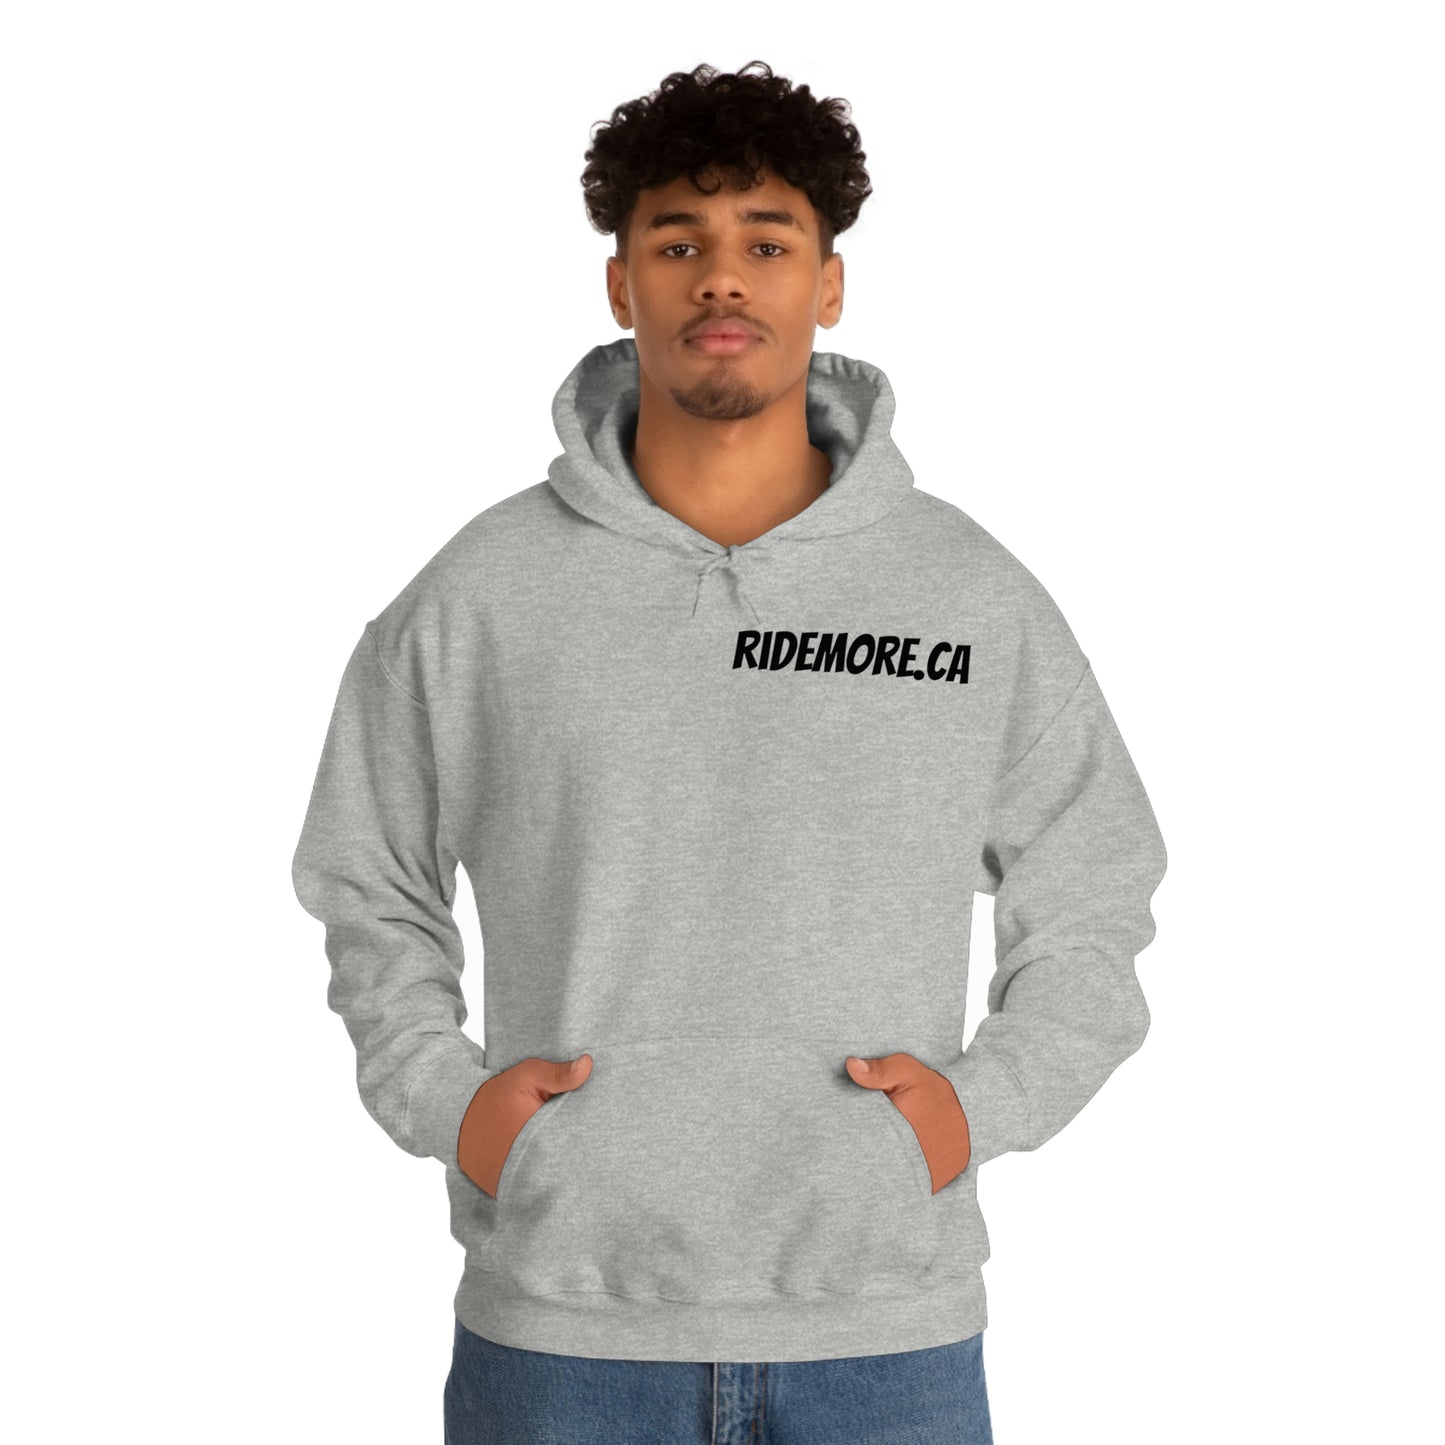 RideMore.ca Hooded Sweatshirt